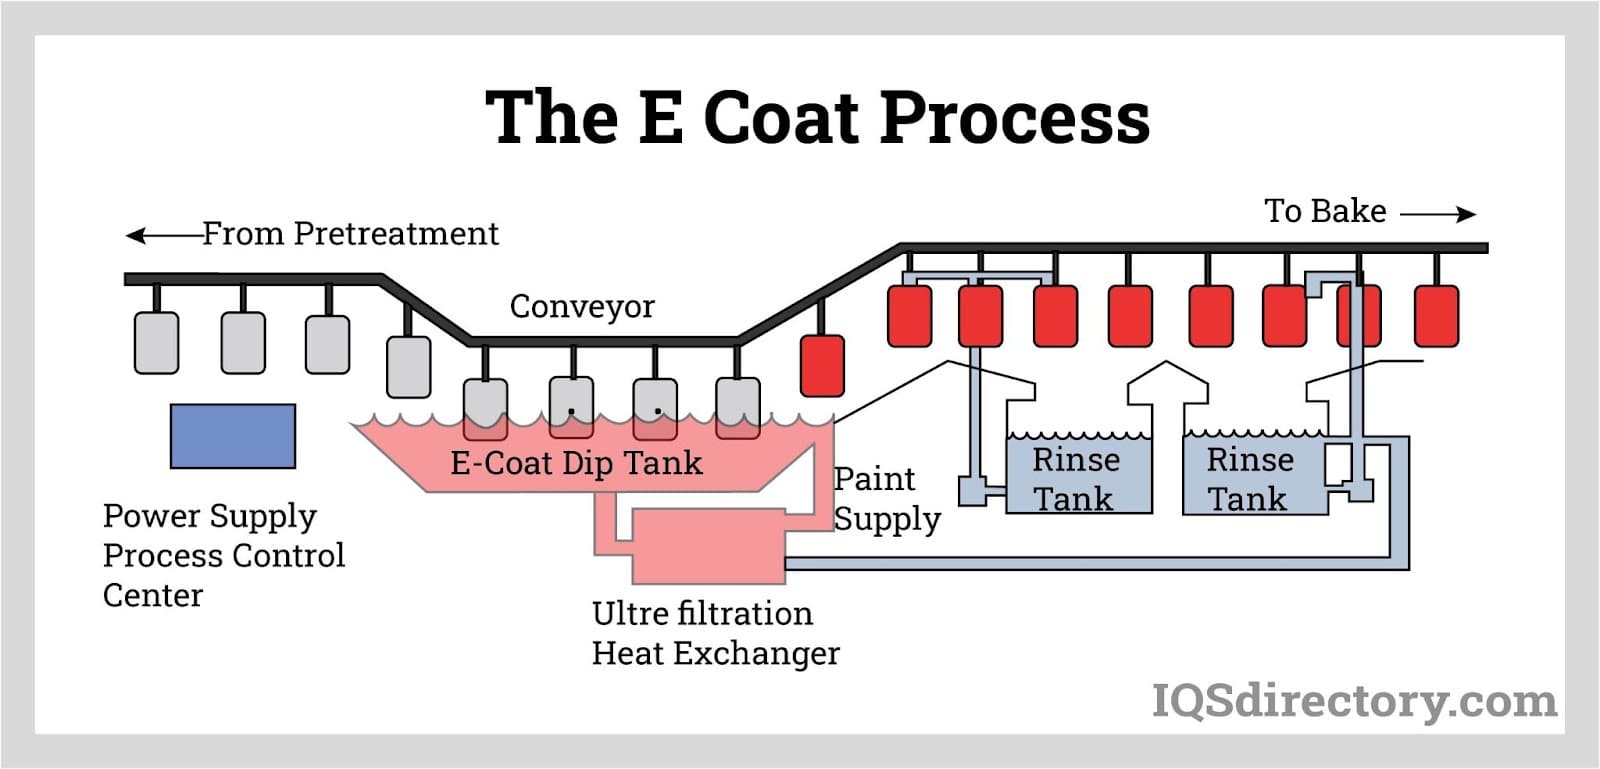 The E Coat Process